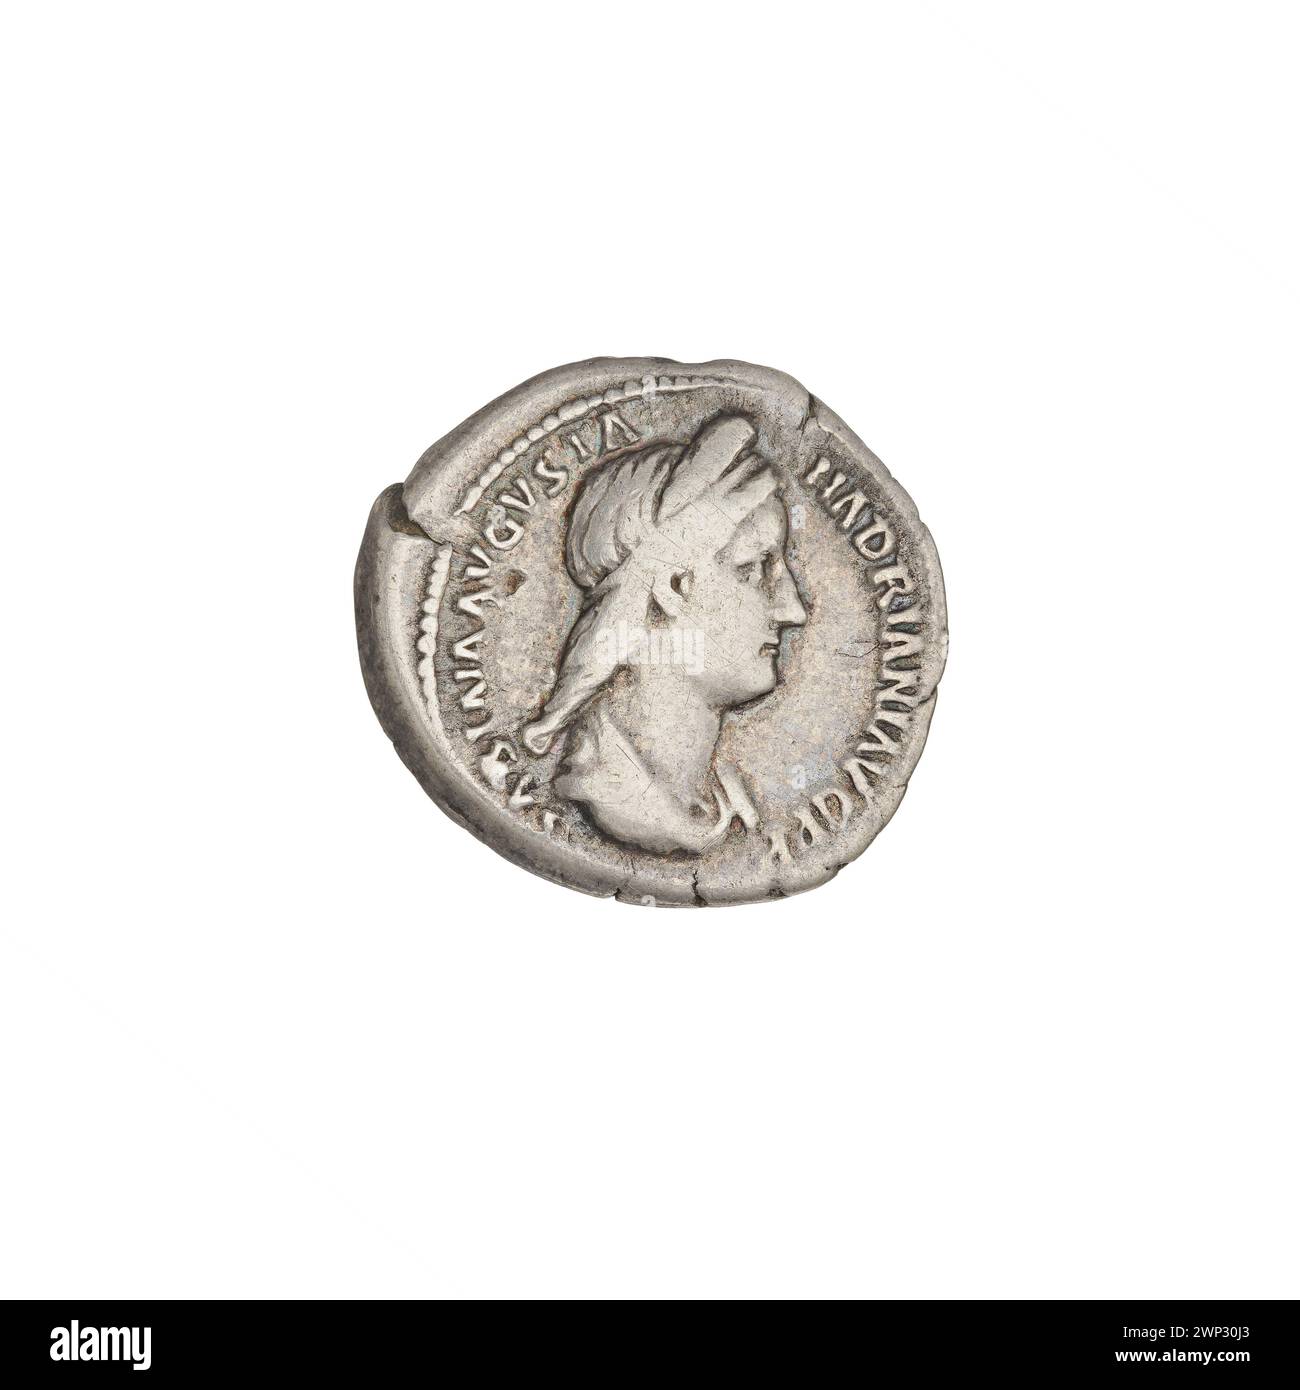 denarius; Sabina (83-137; Roman Empress 117-137), Hadrian (76-138; Roman emperor 117-138); 128-134 (134-00-00-138-00-00);Pudicitia (Personification), busts, veils Stock Photo